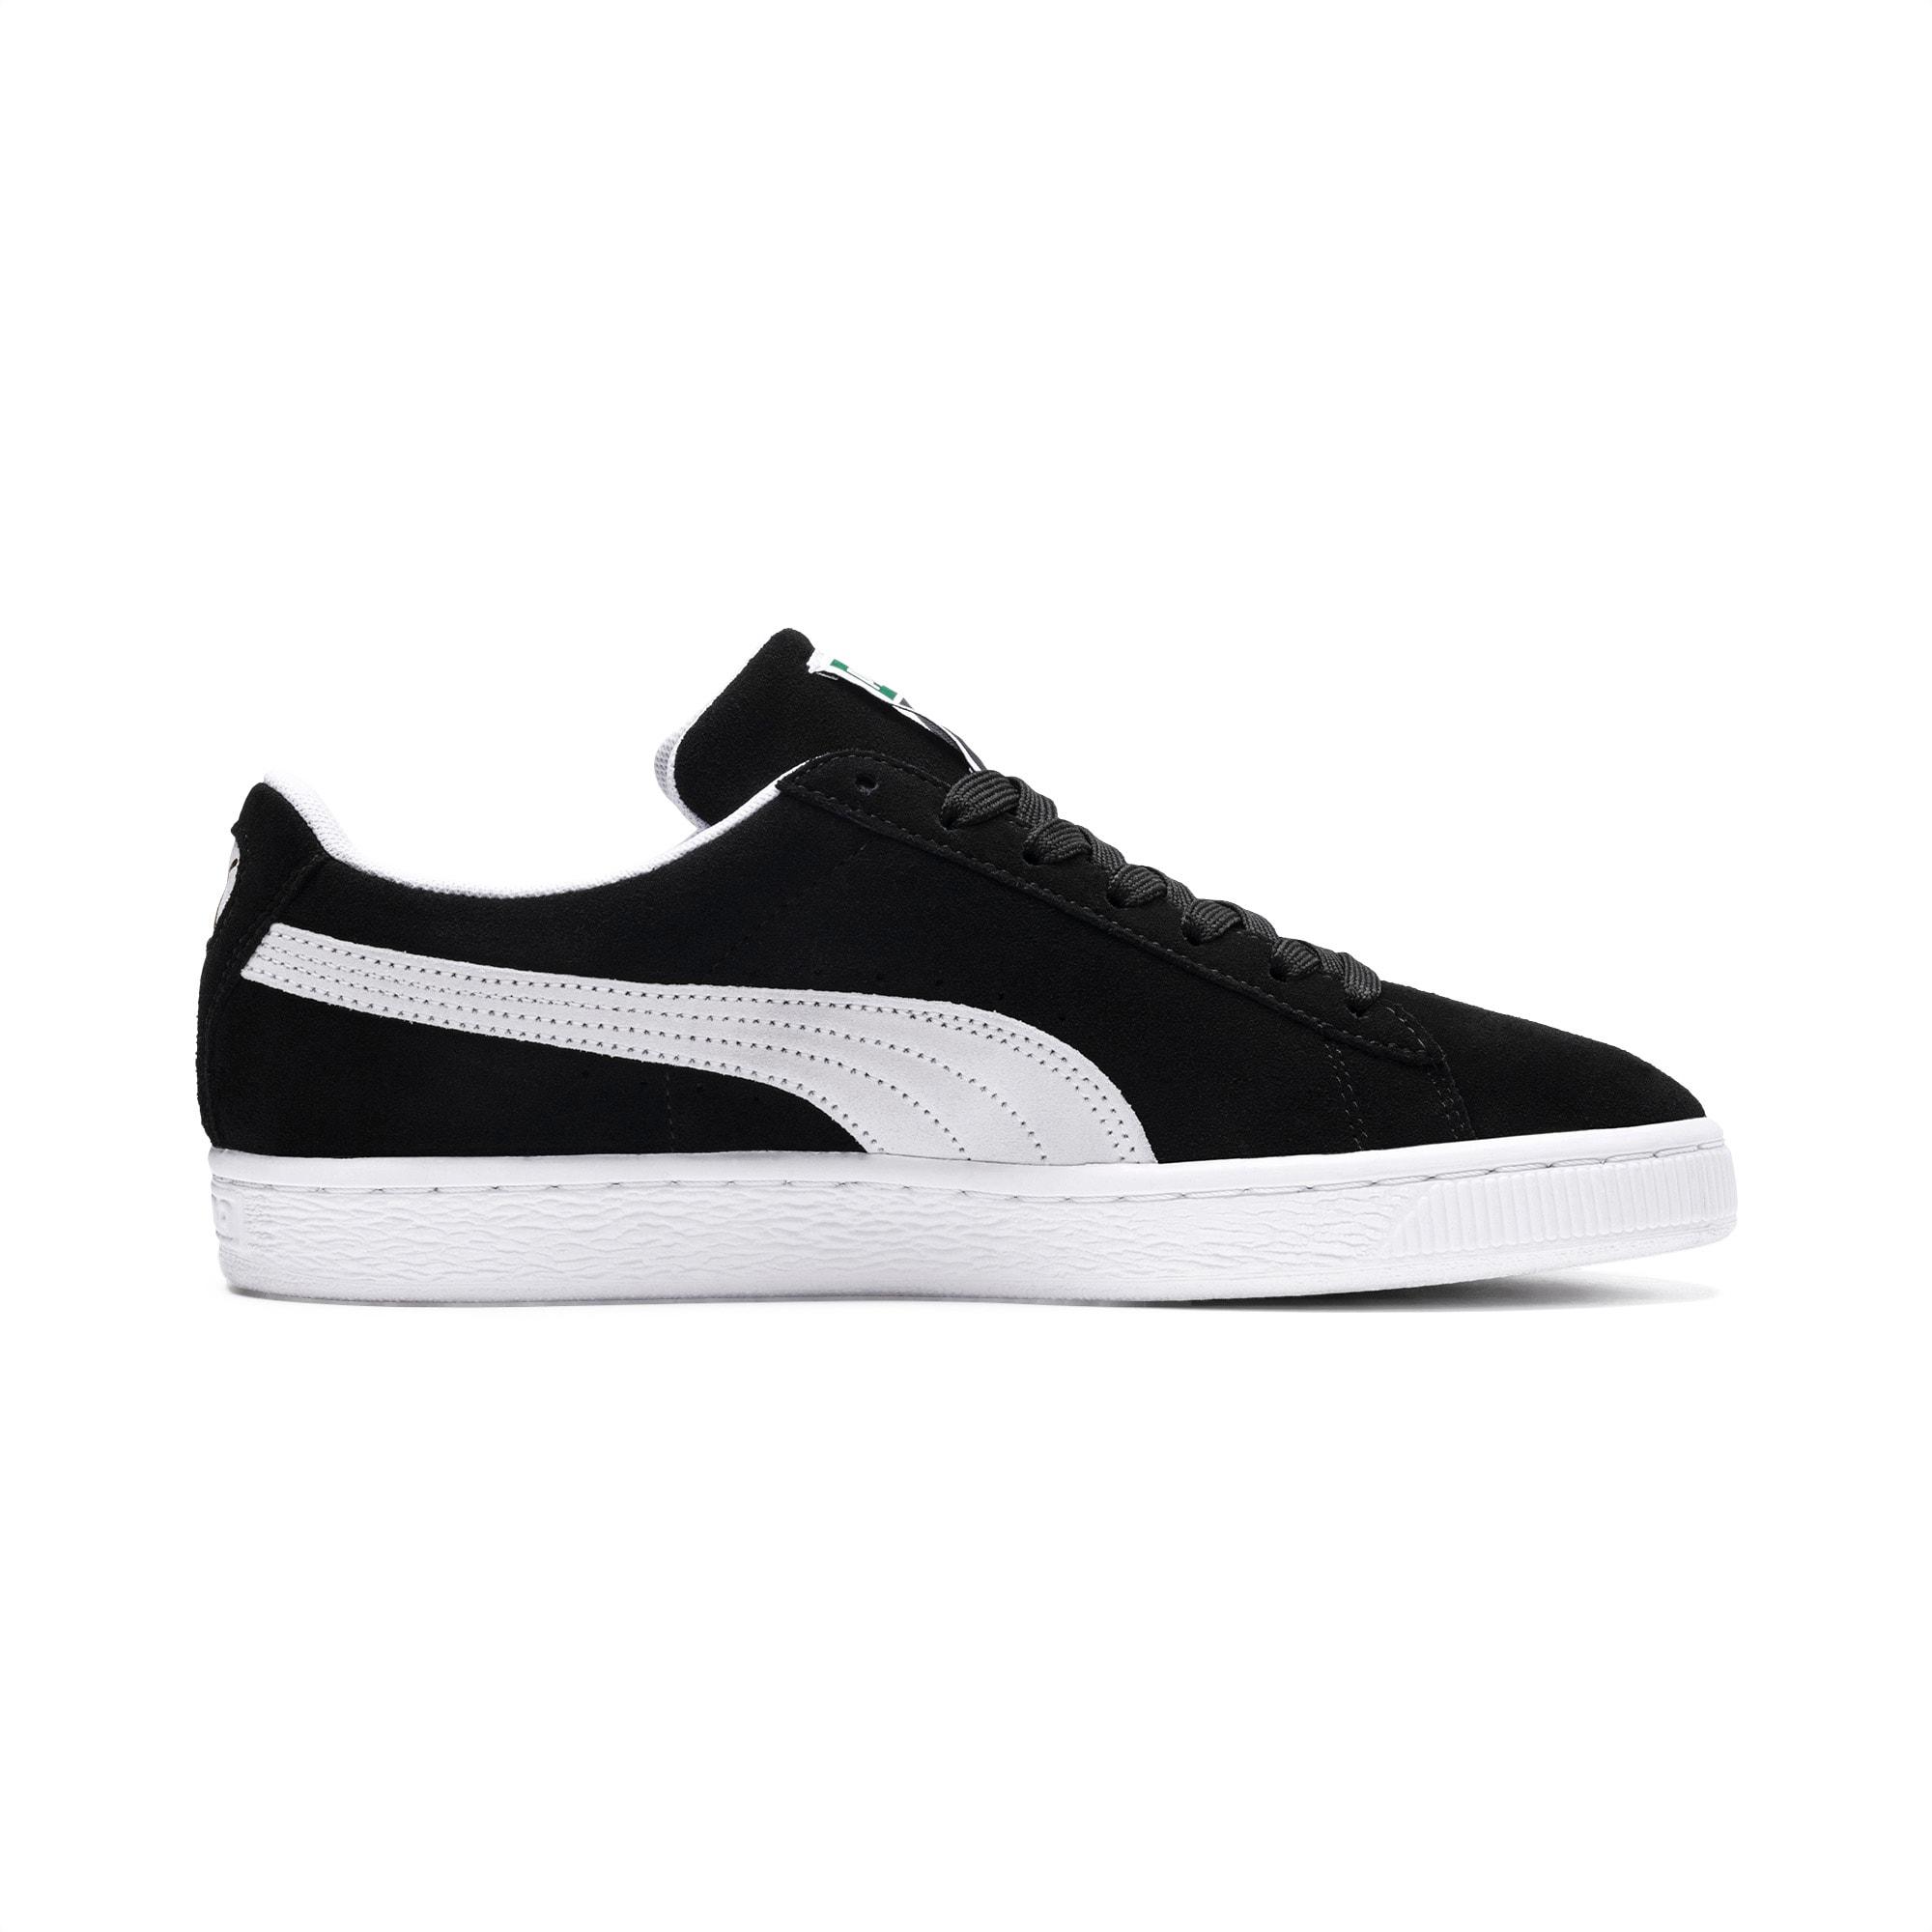 PUMA Suede Classic+ Sneakers in Black-White (Black) - Lyst